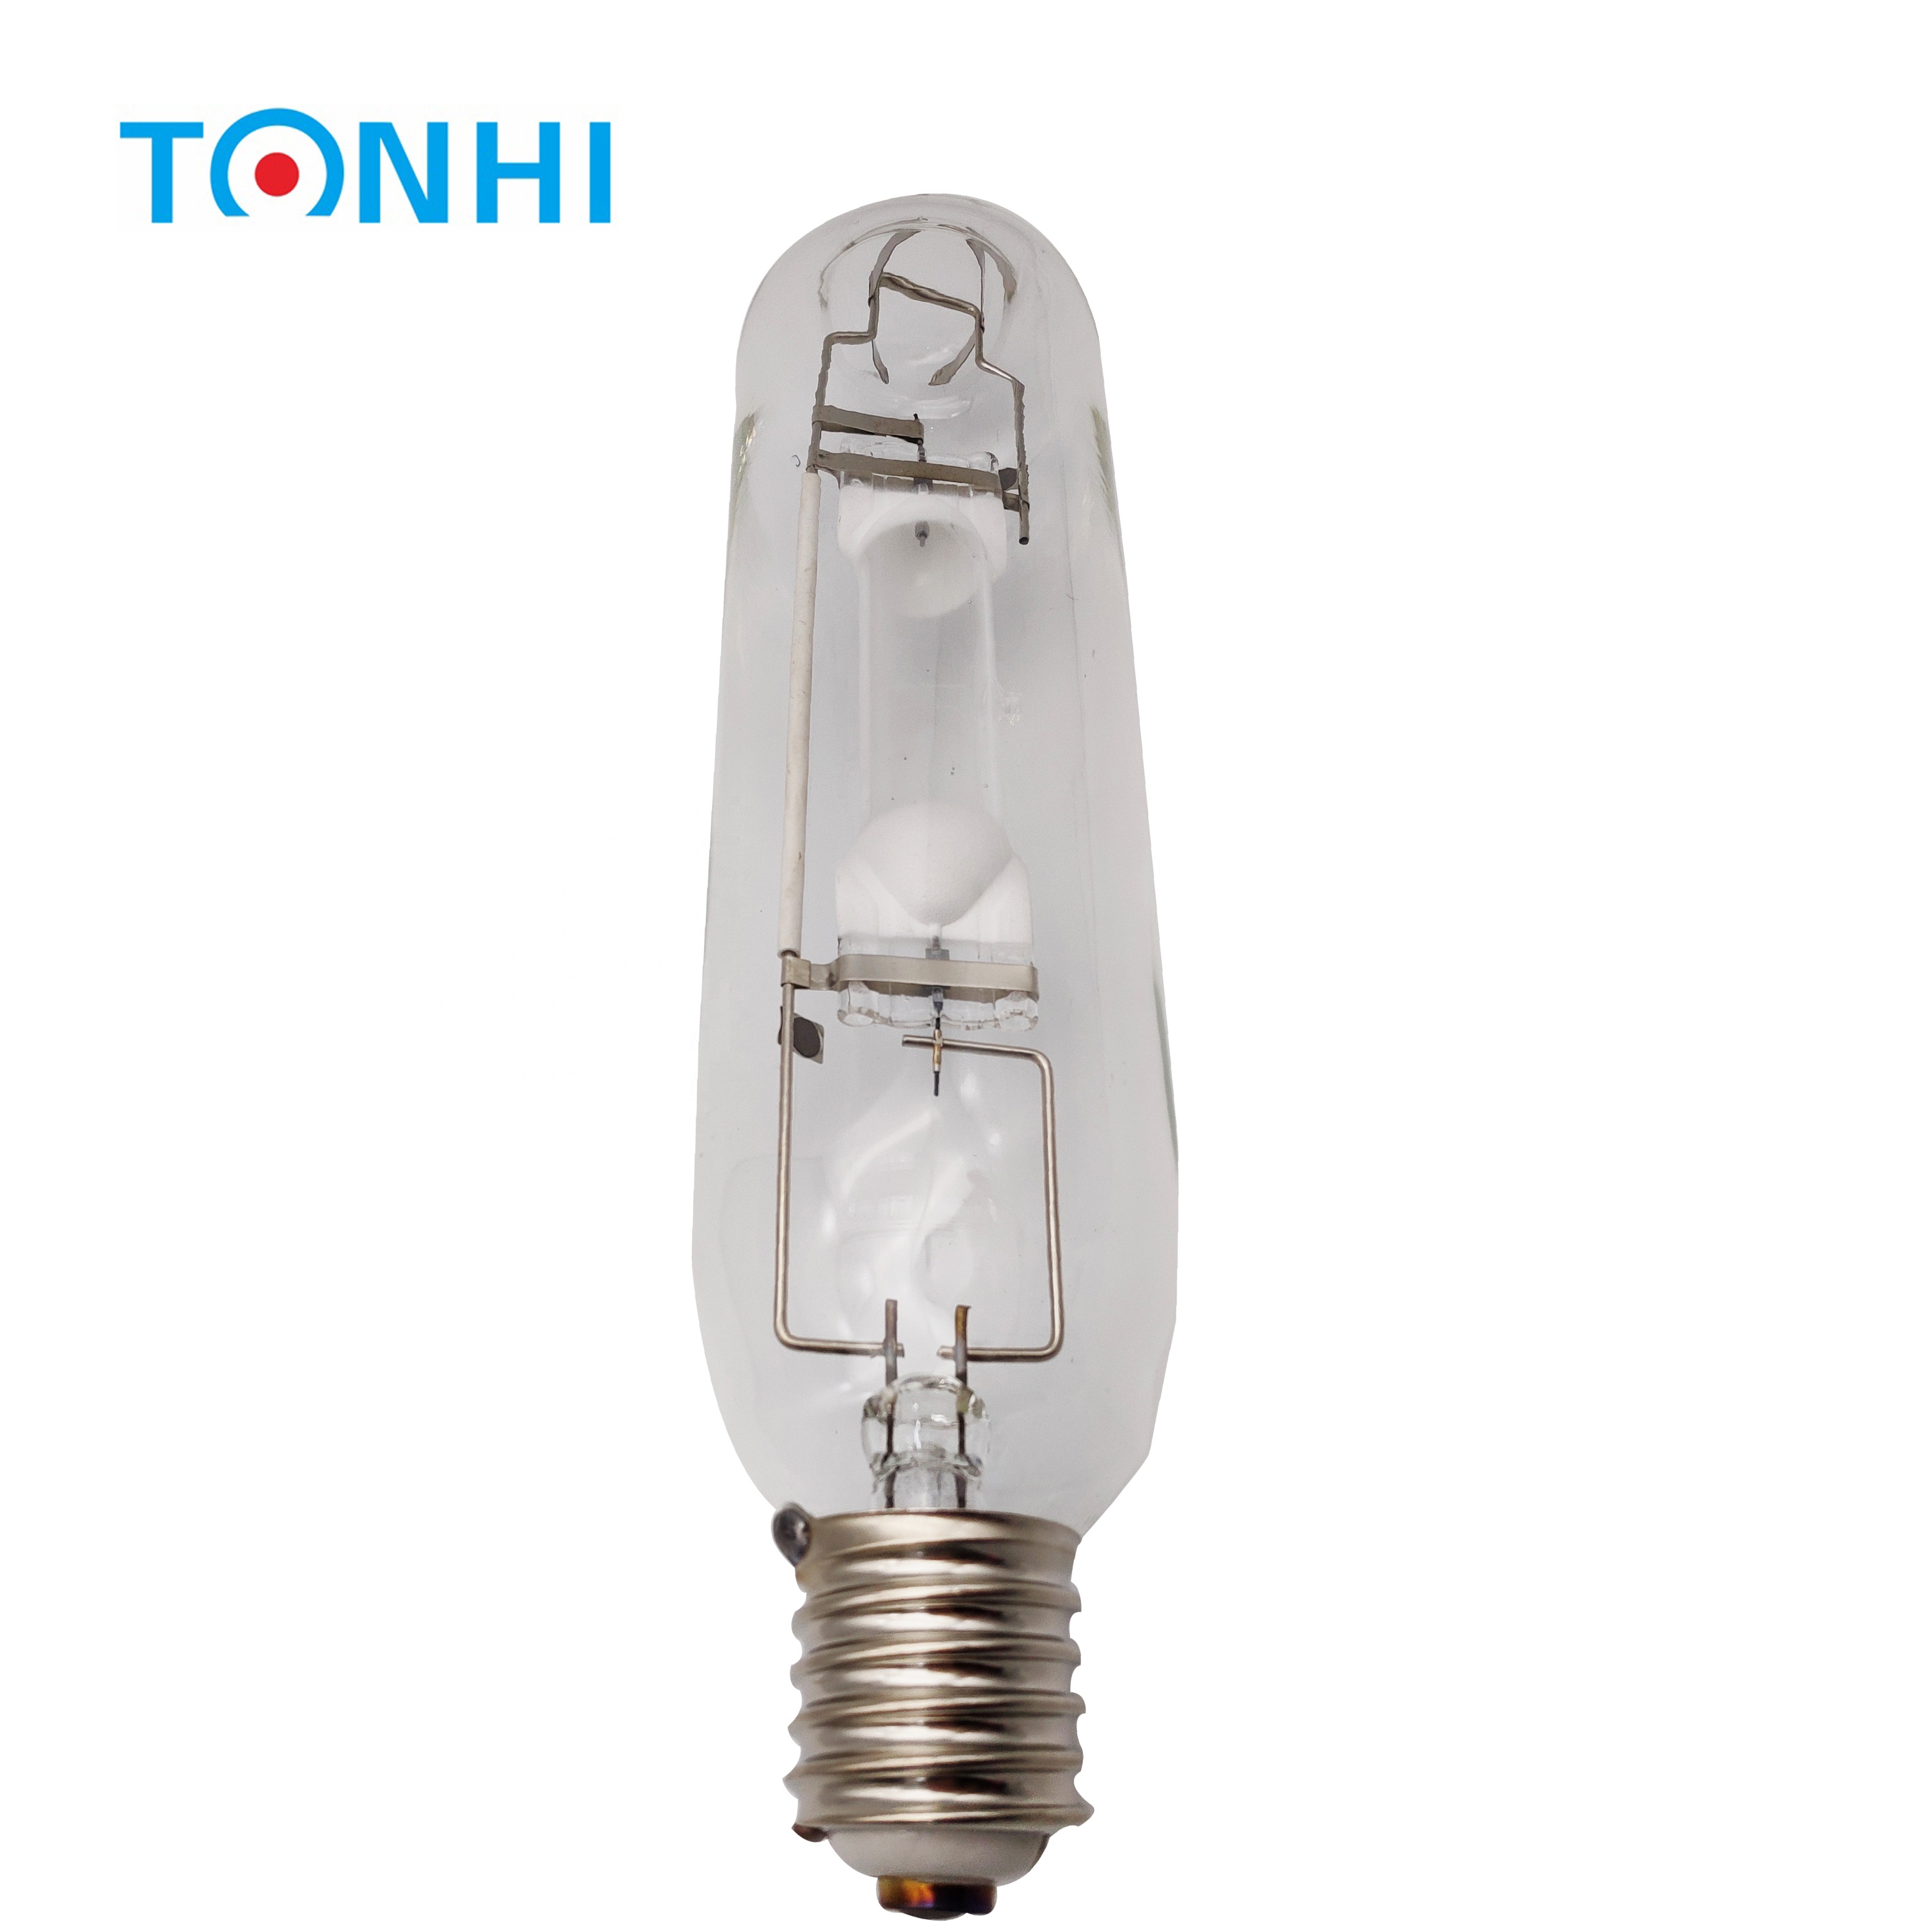 1000W TT76 Metal Halide Lamp